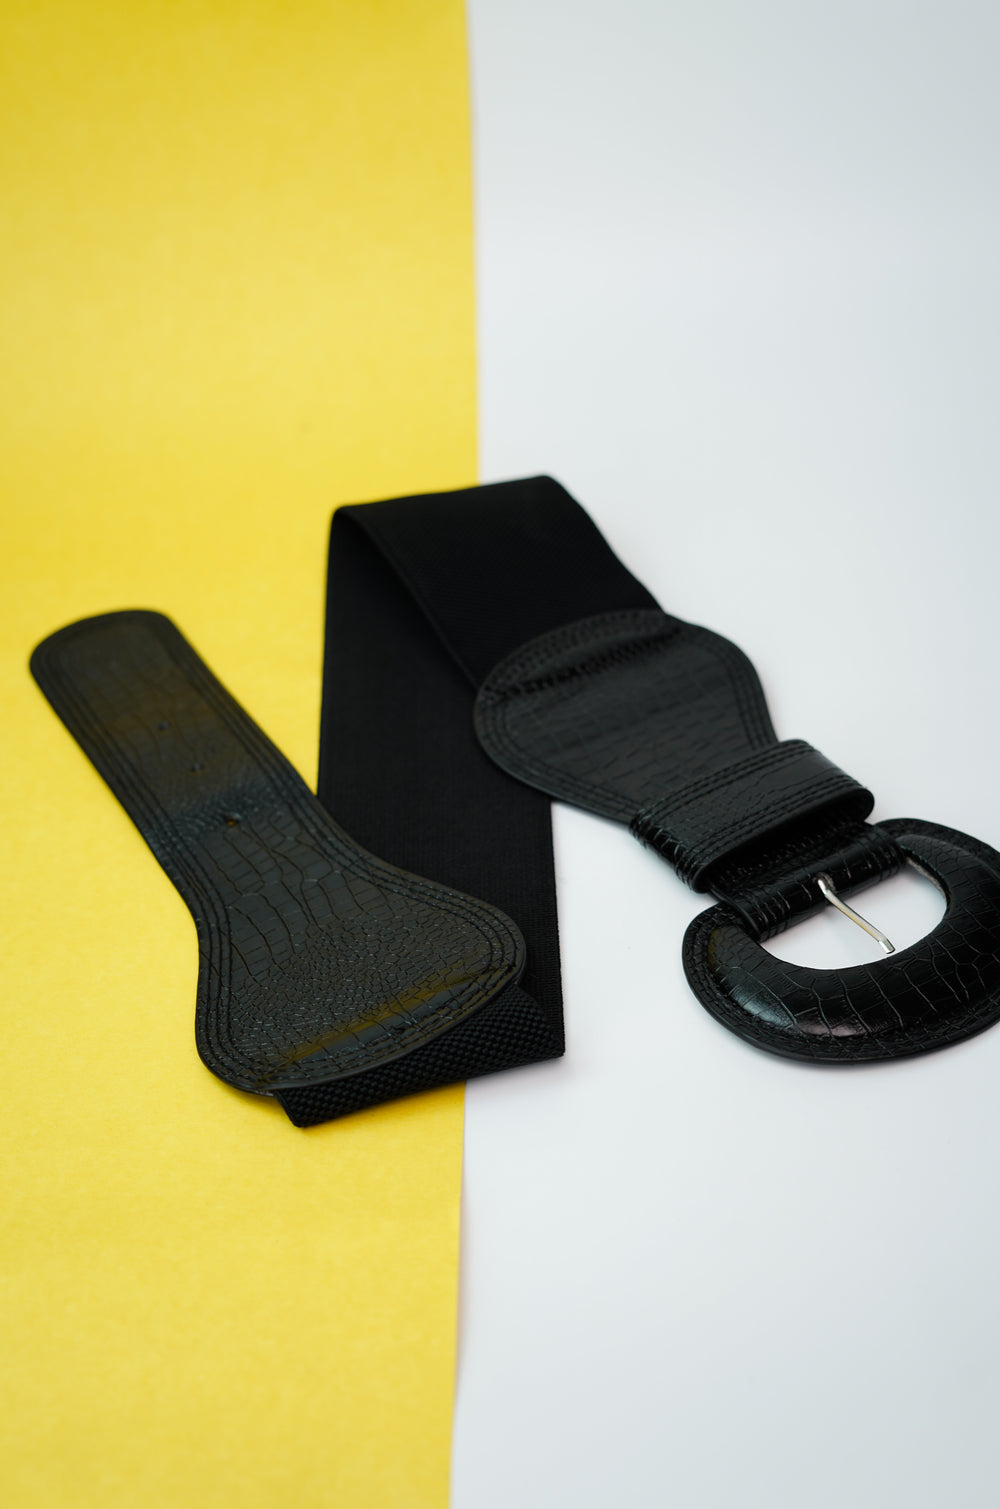 Designer women's elastic belt in black